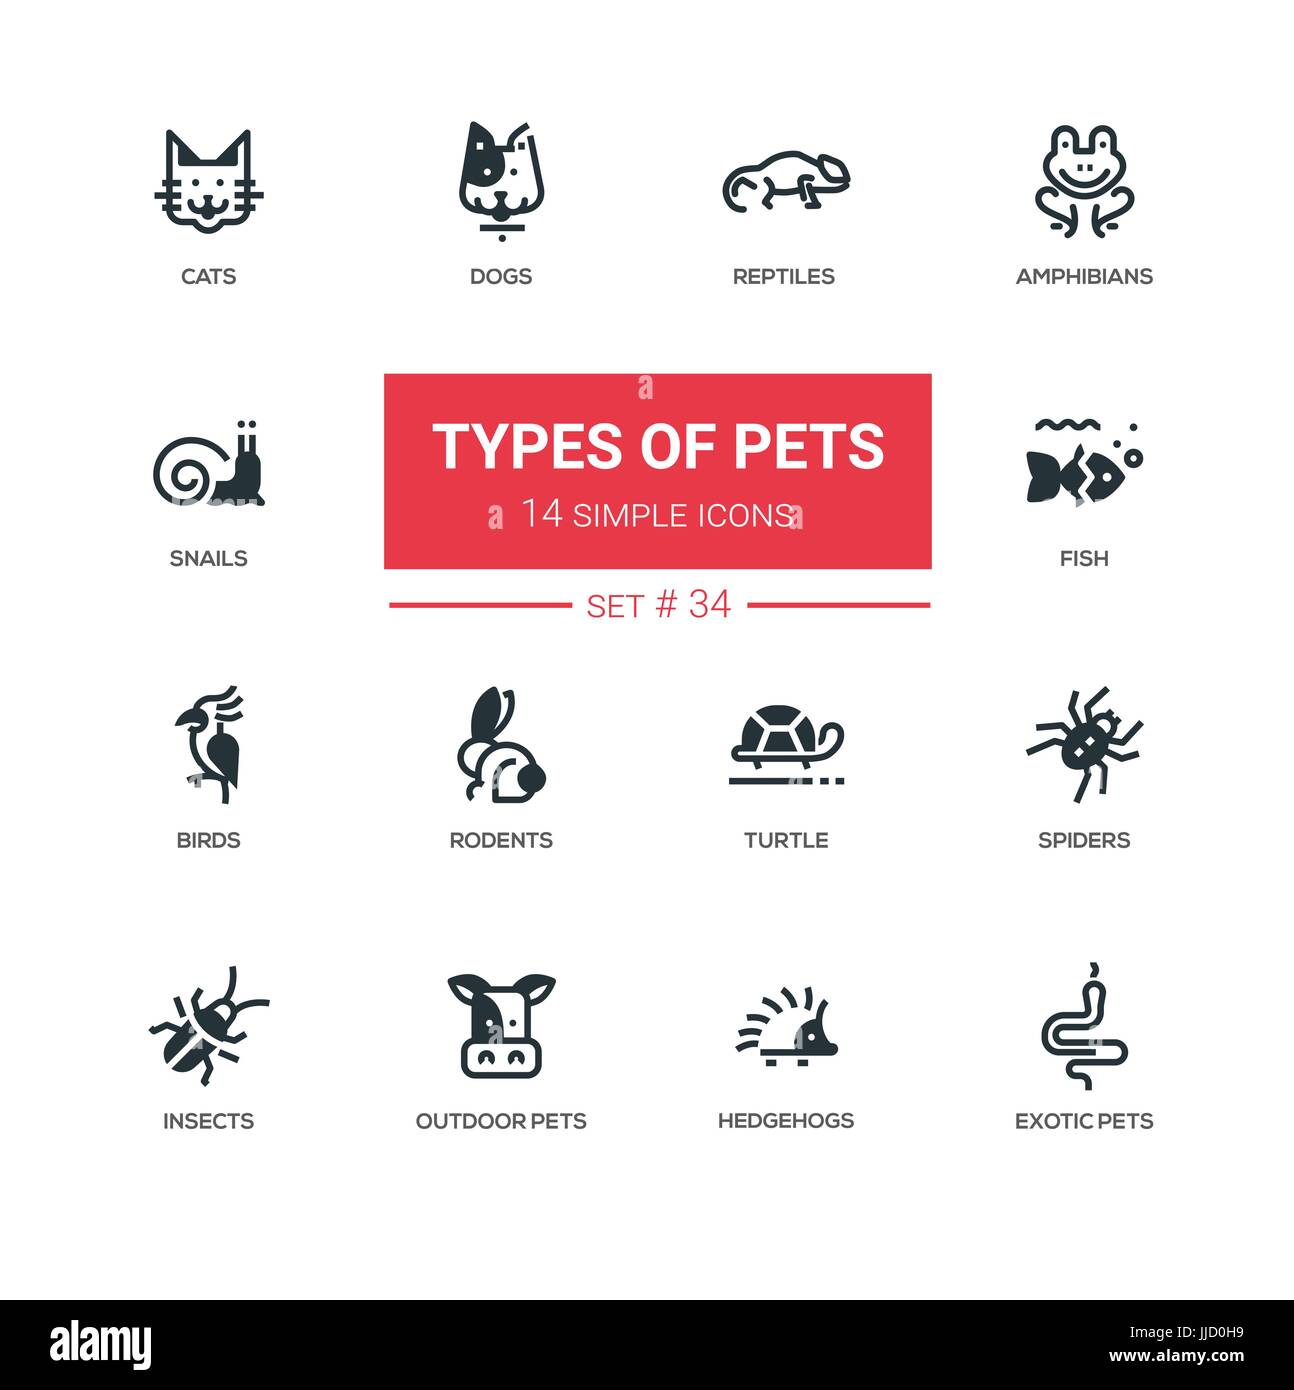 Type of pet. Модельный ряд Cat пиктограмма. Types of Pets. Types of petting.